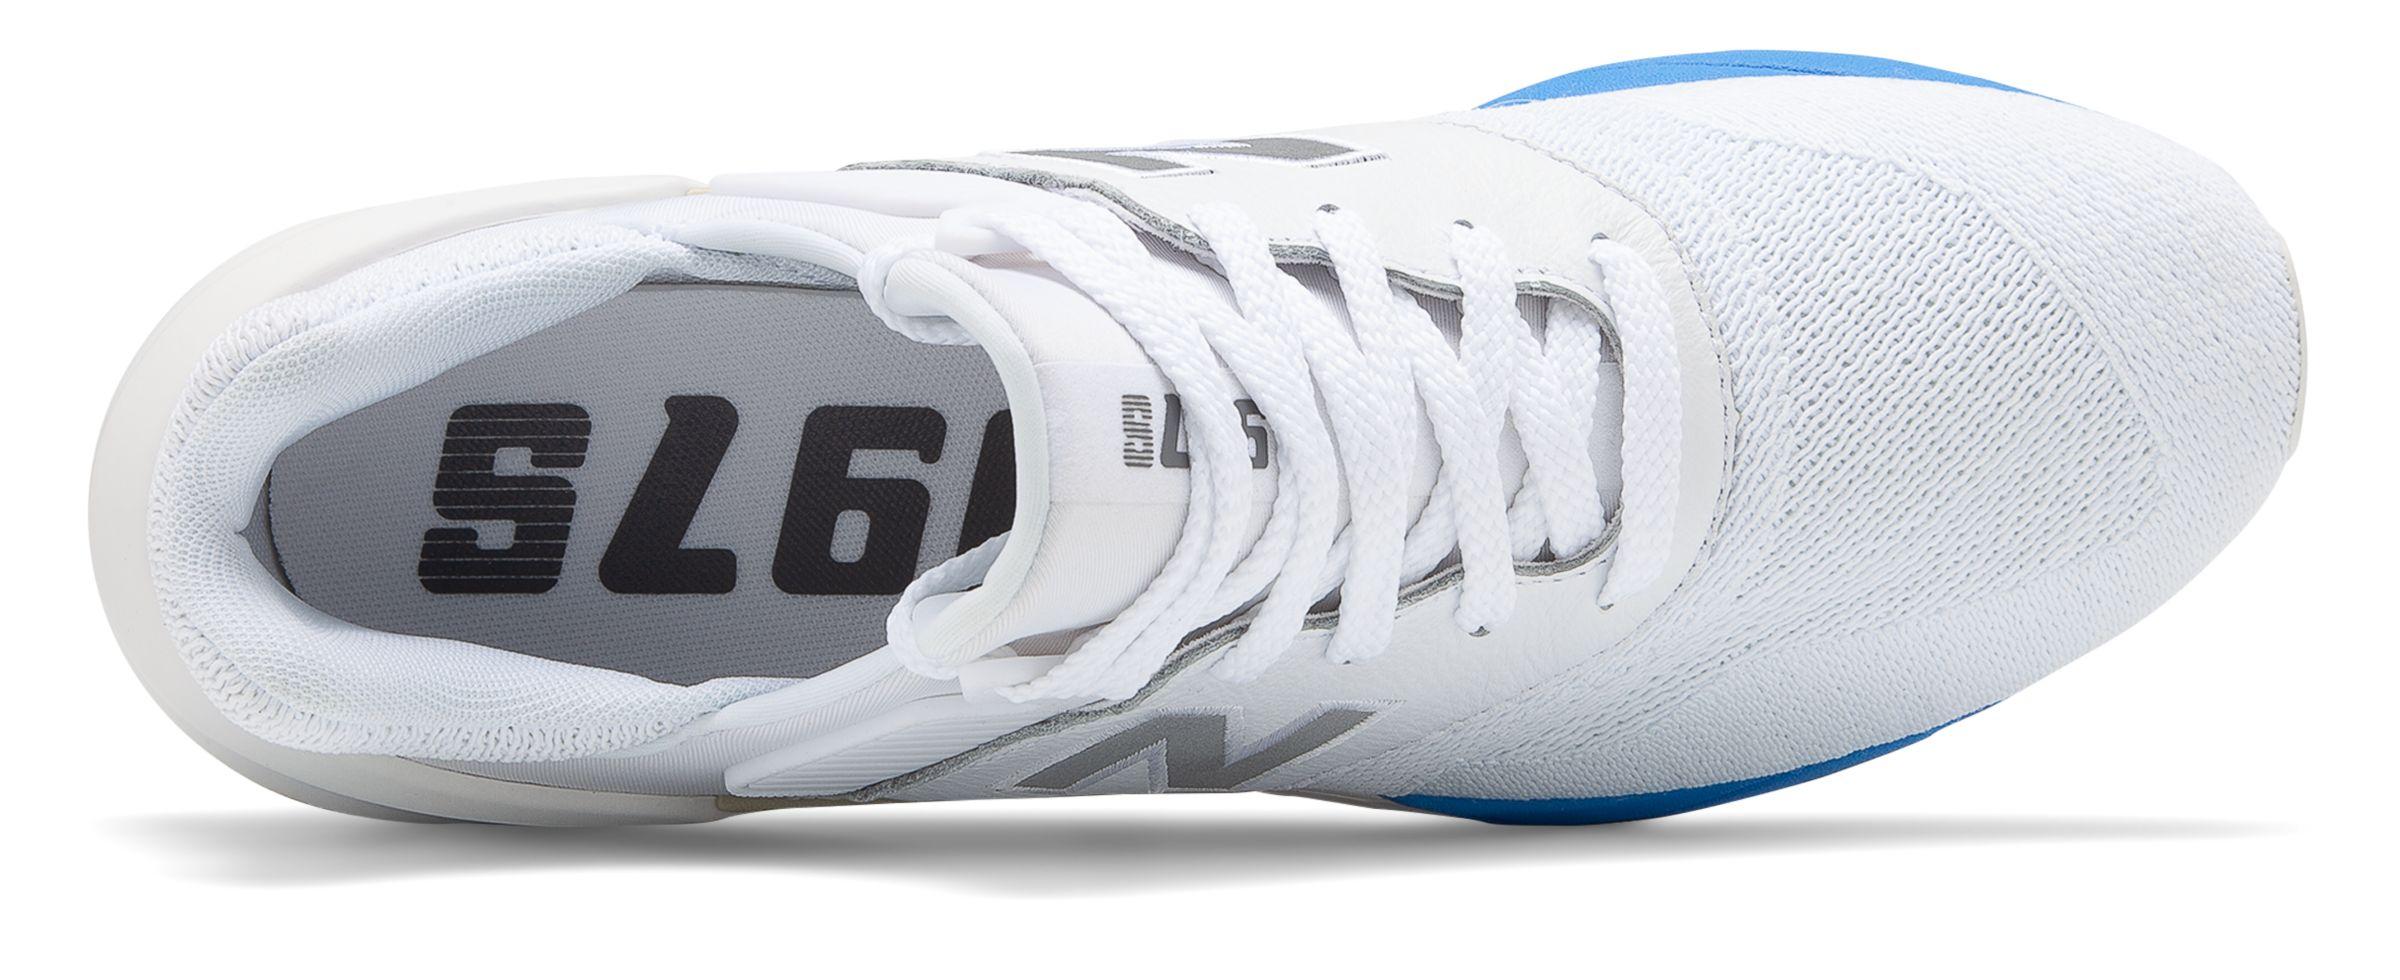 new balance 997 sport white with light cobalt